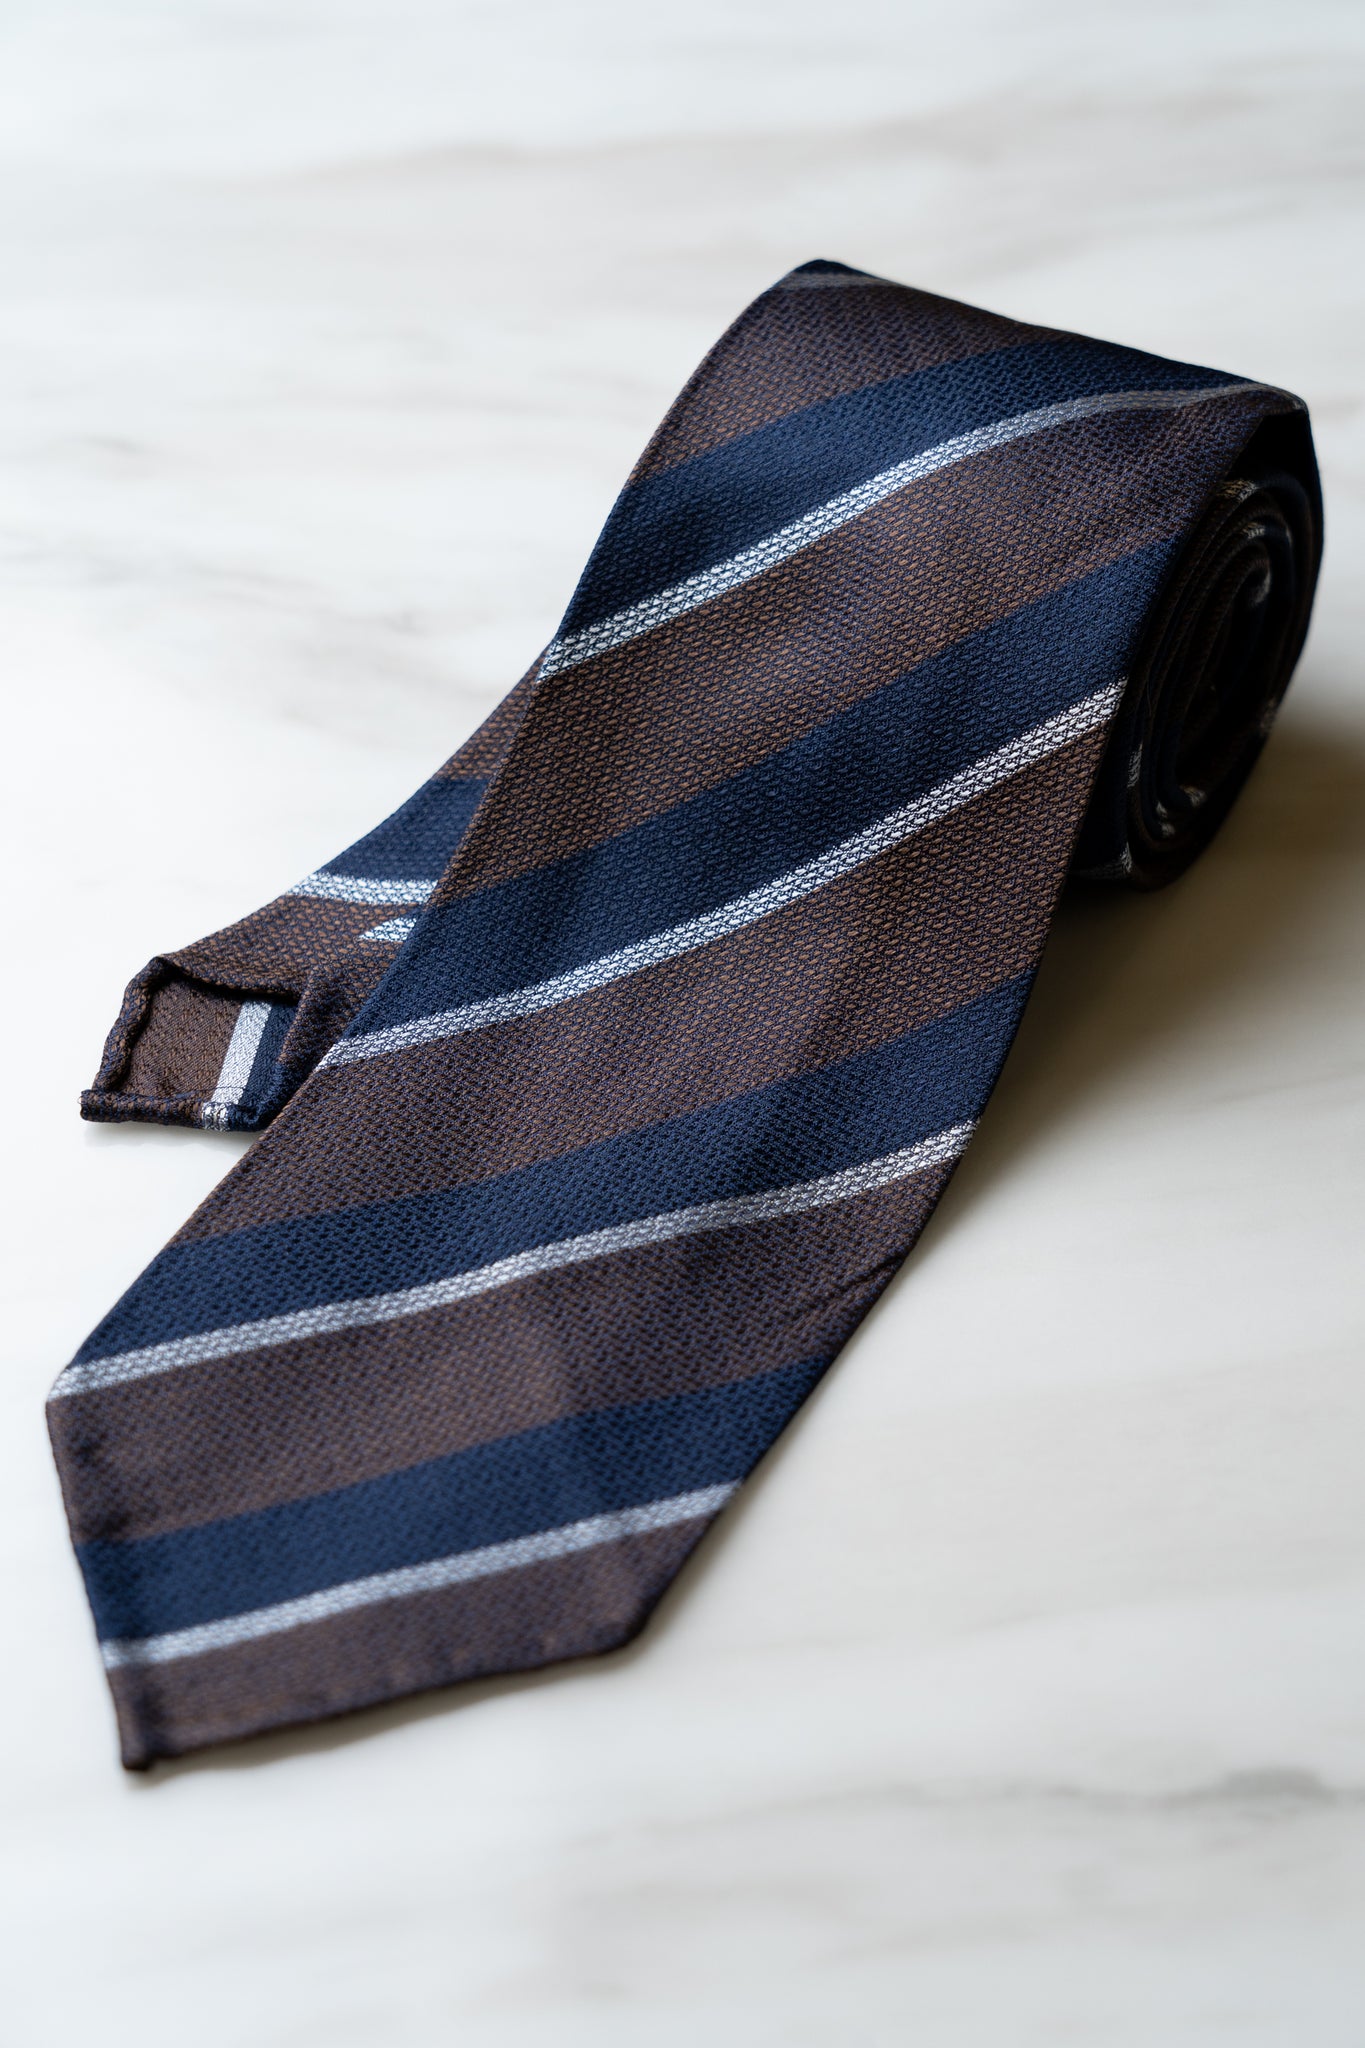 AT095BNBU Brown/Blue Stripe Tie